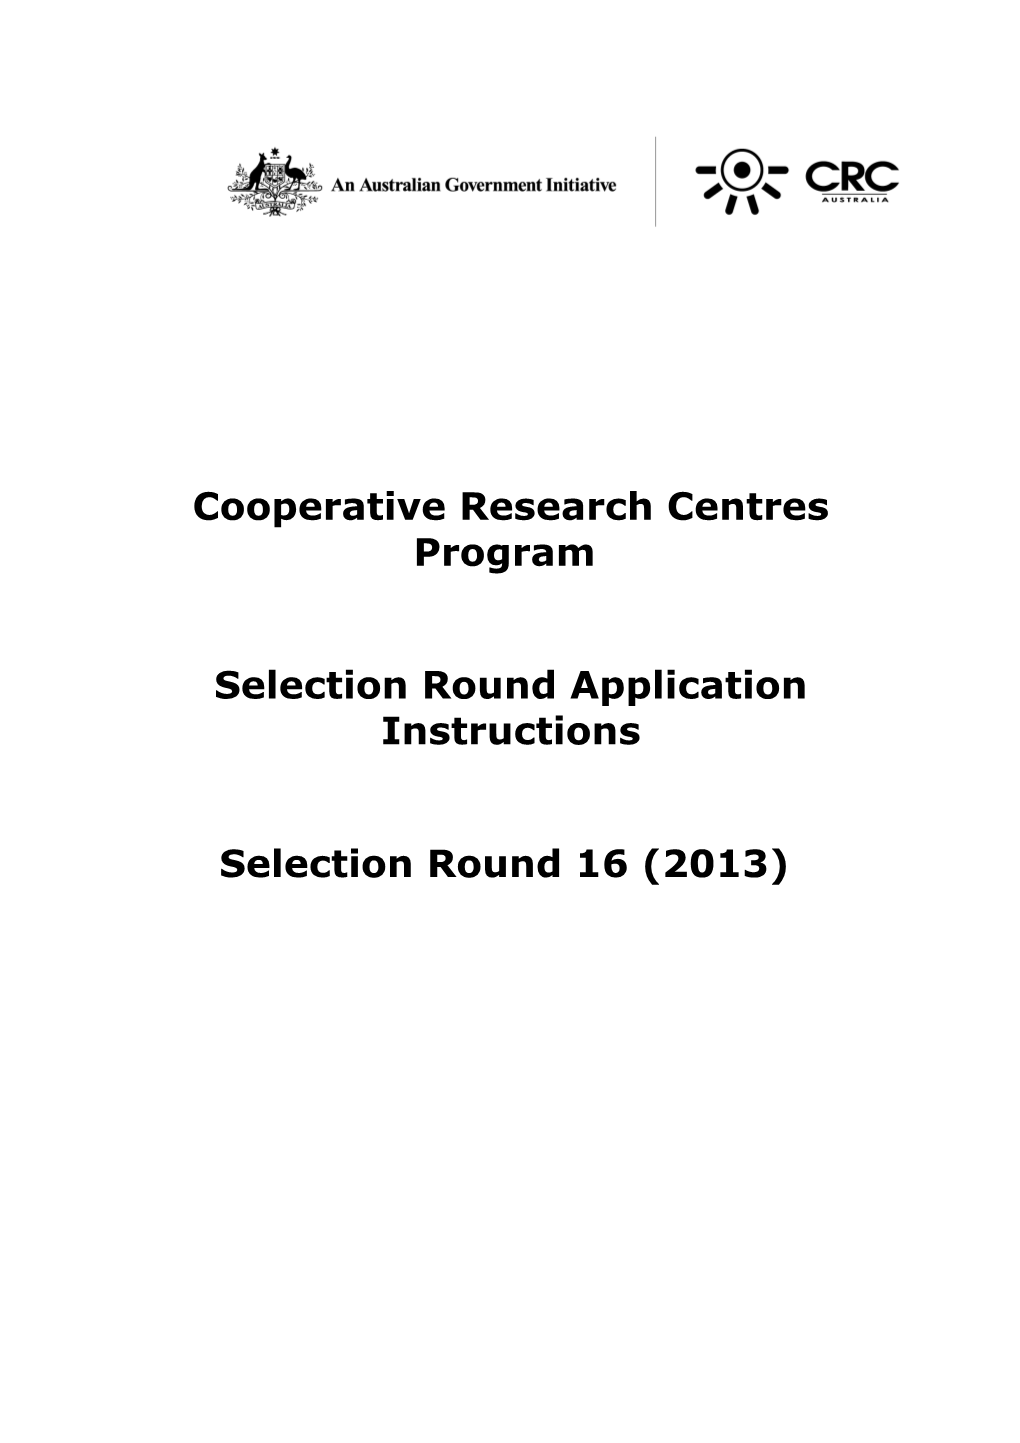 Cooperative Research Centres Program